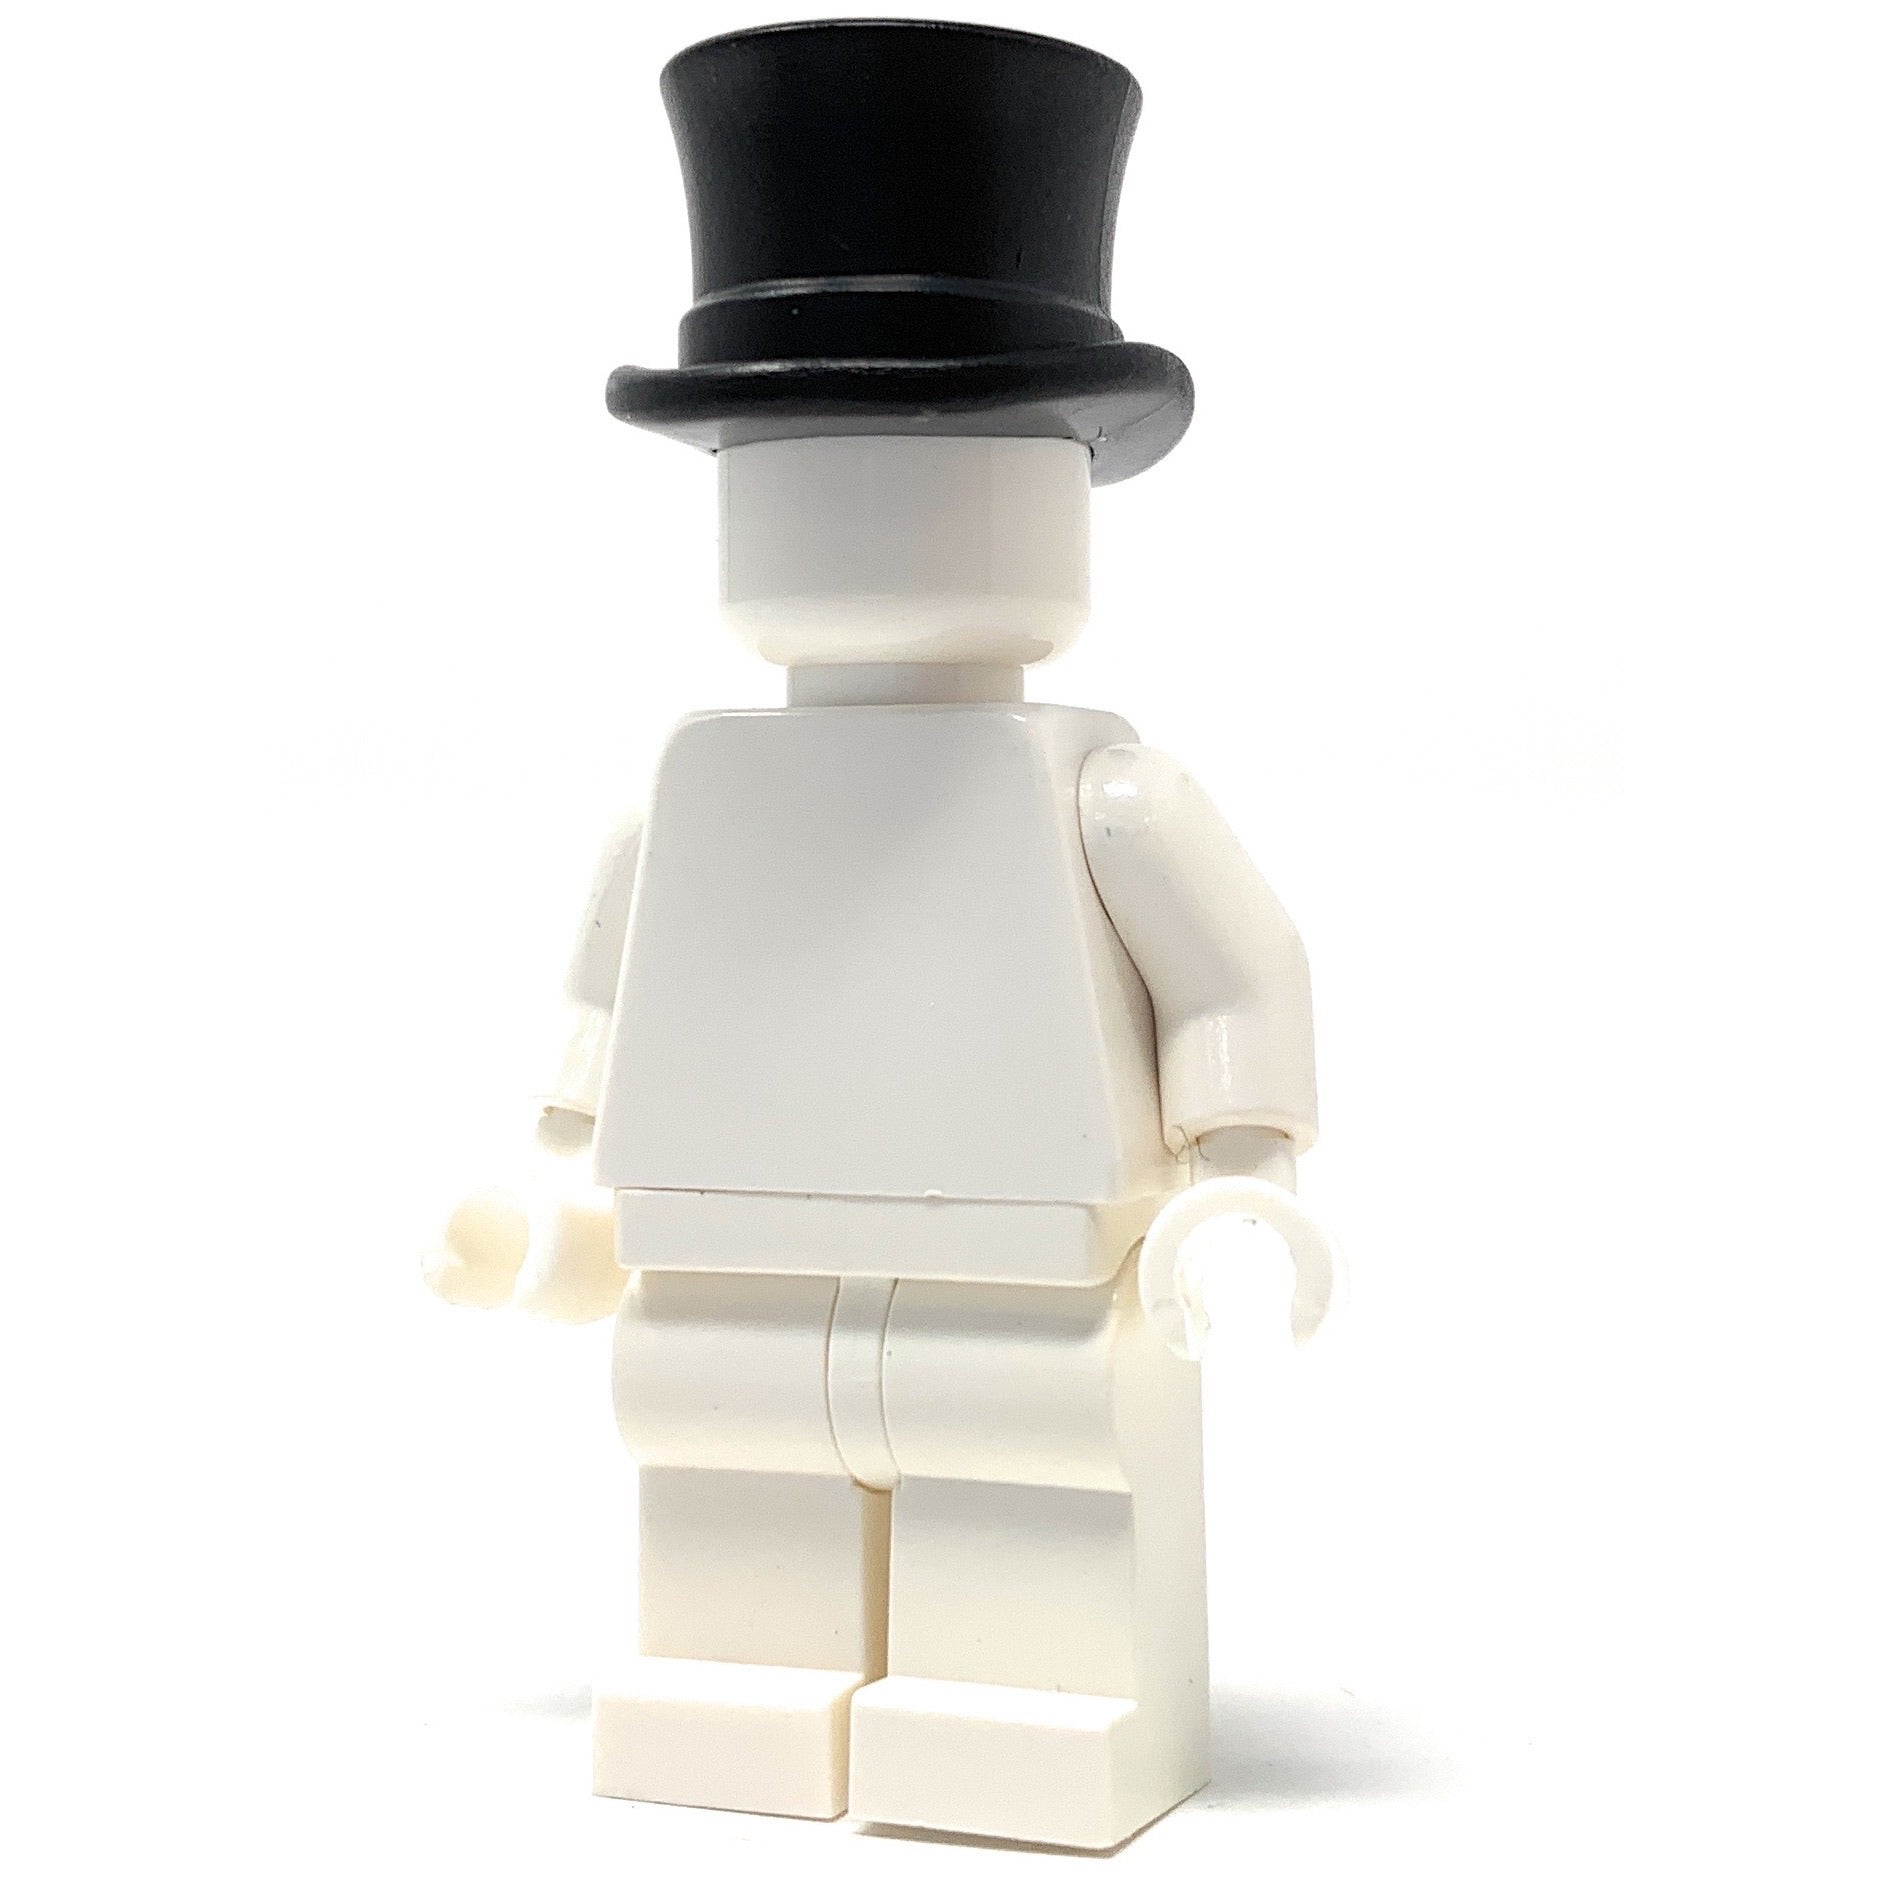 Top Hat for LEGO Minifigures, Brick Warriors - LEGO Compatible The Brick Show